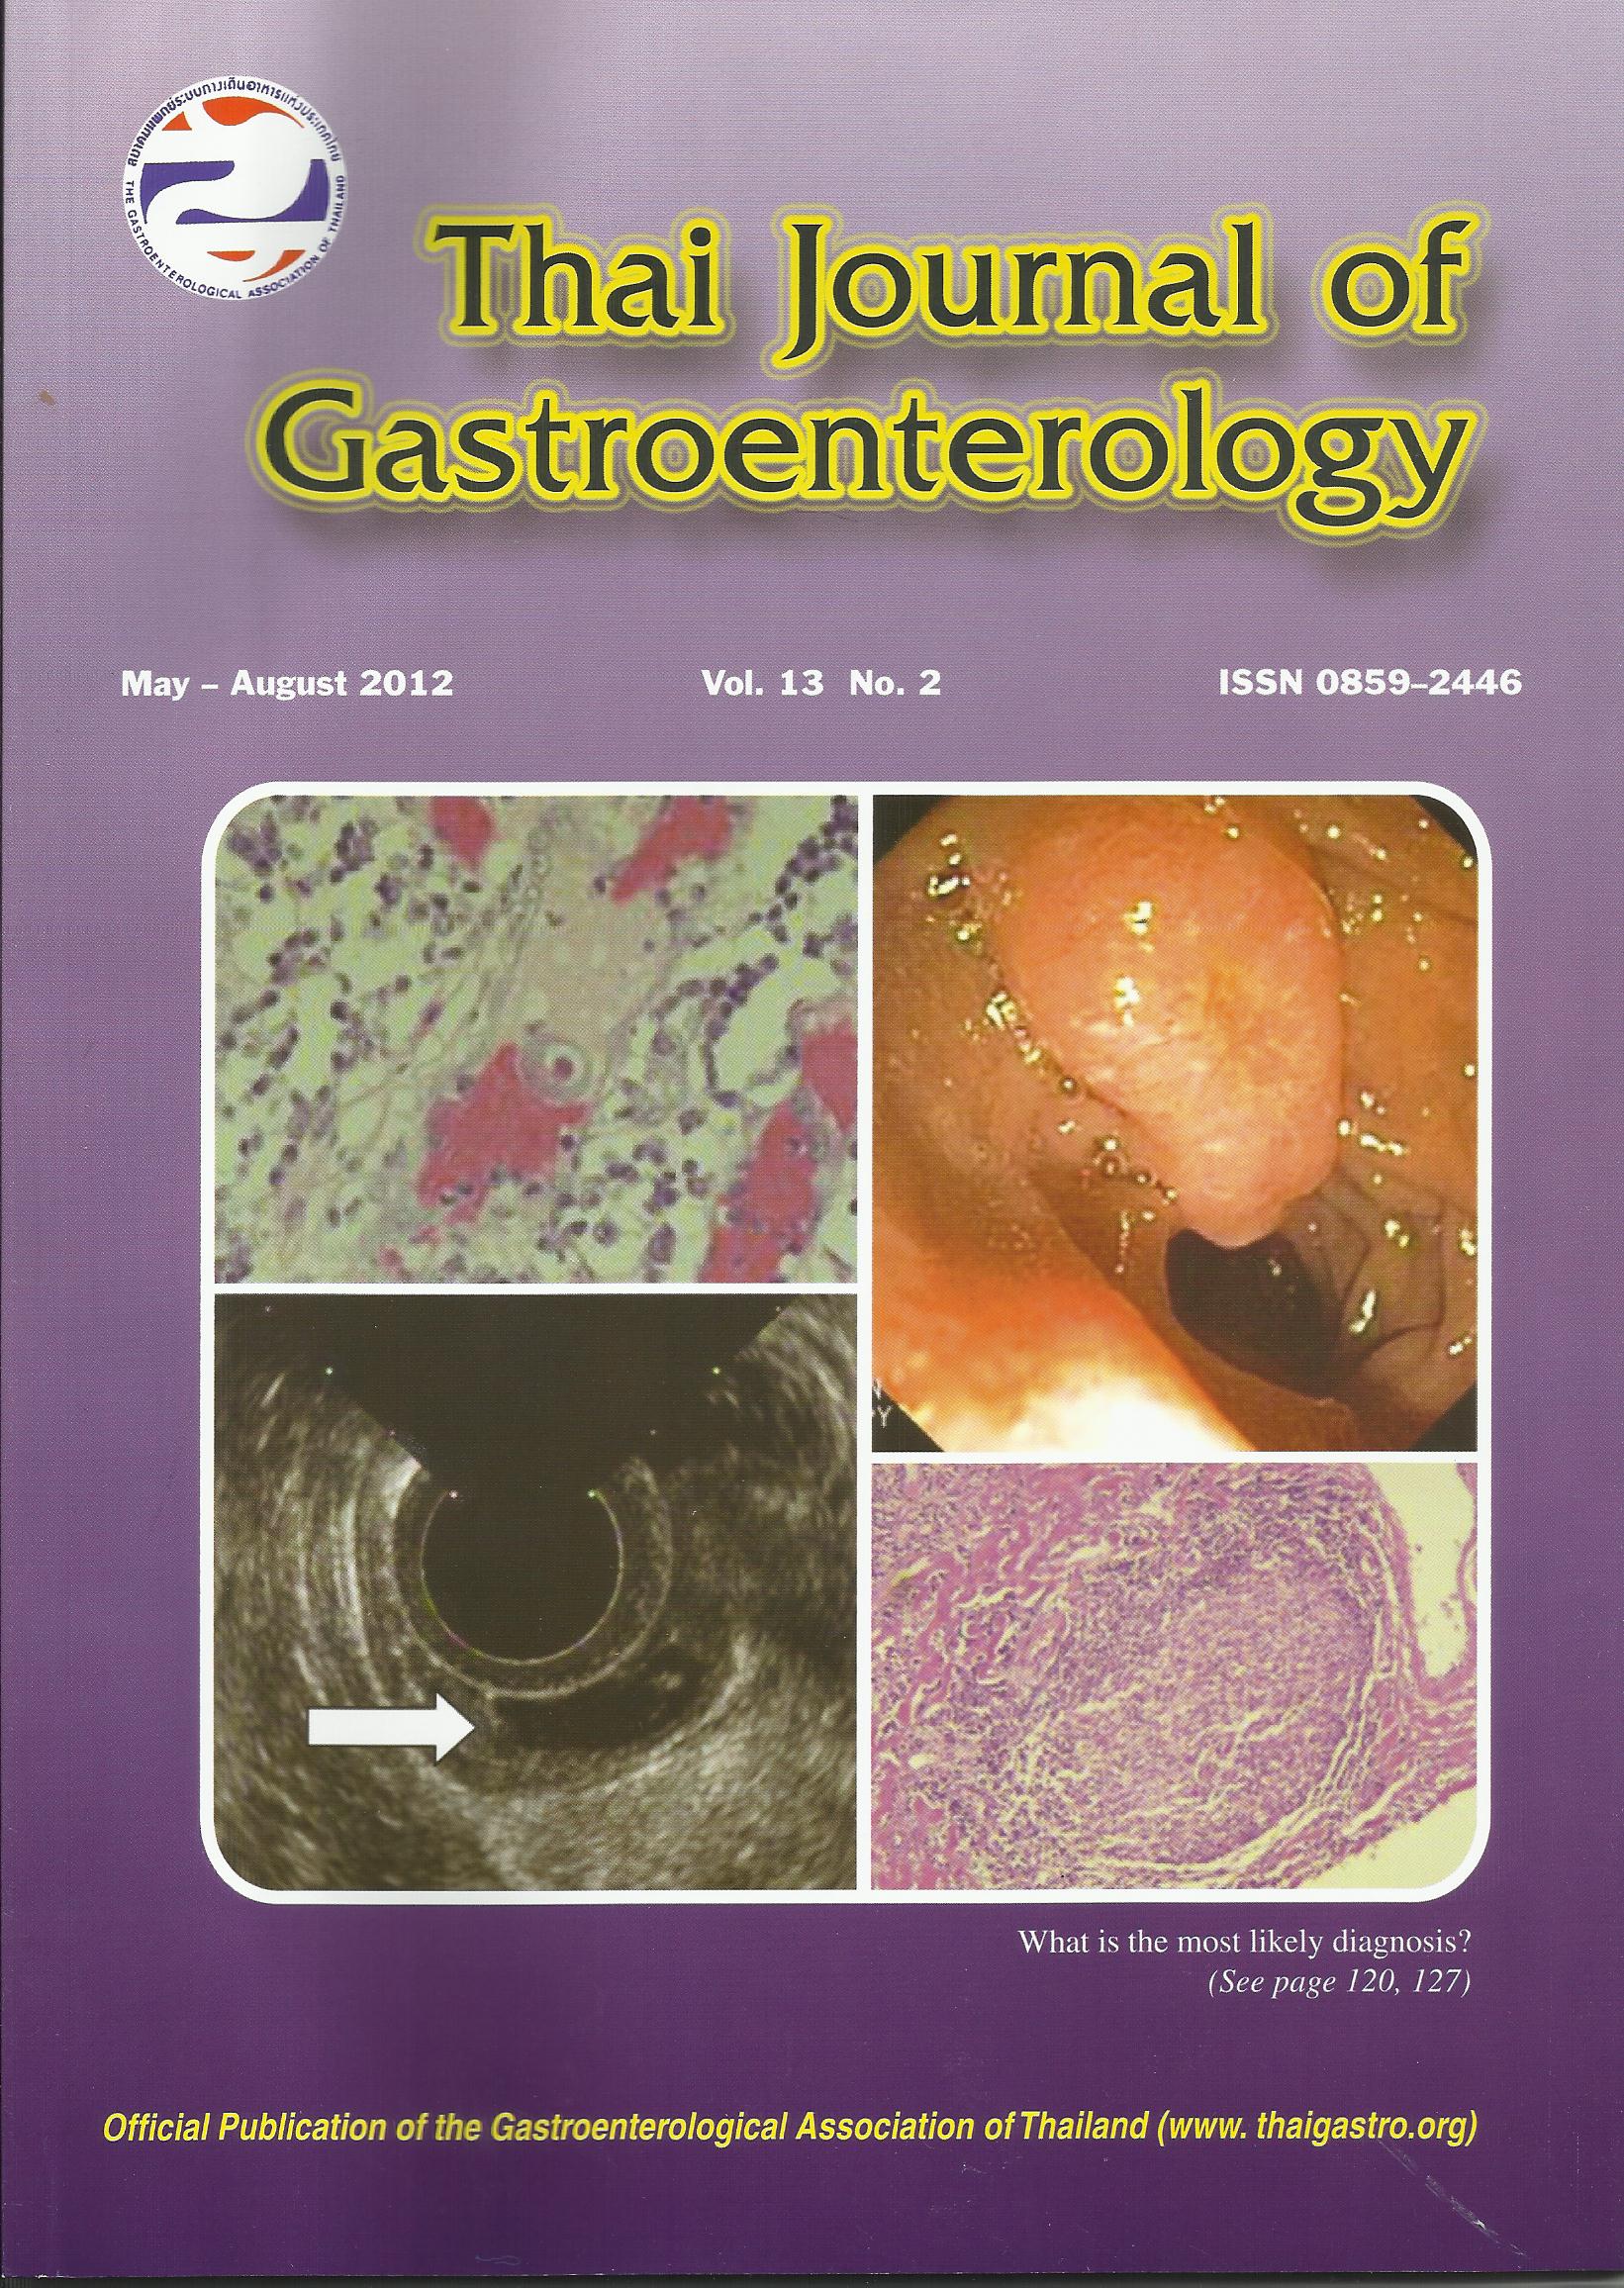 file/Thai-Journal-of-gastroenterology-images1339489.jpg